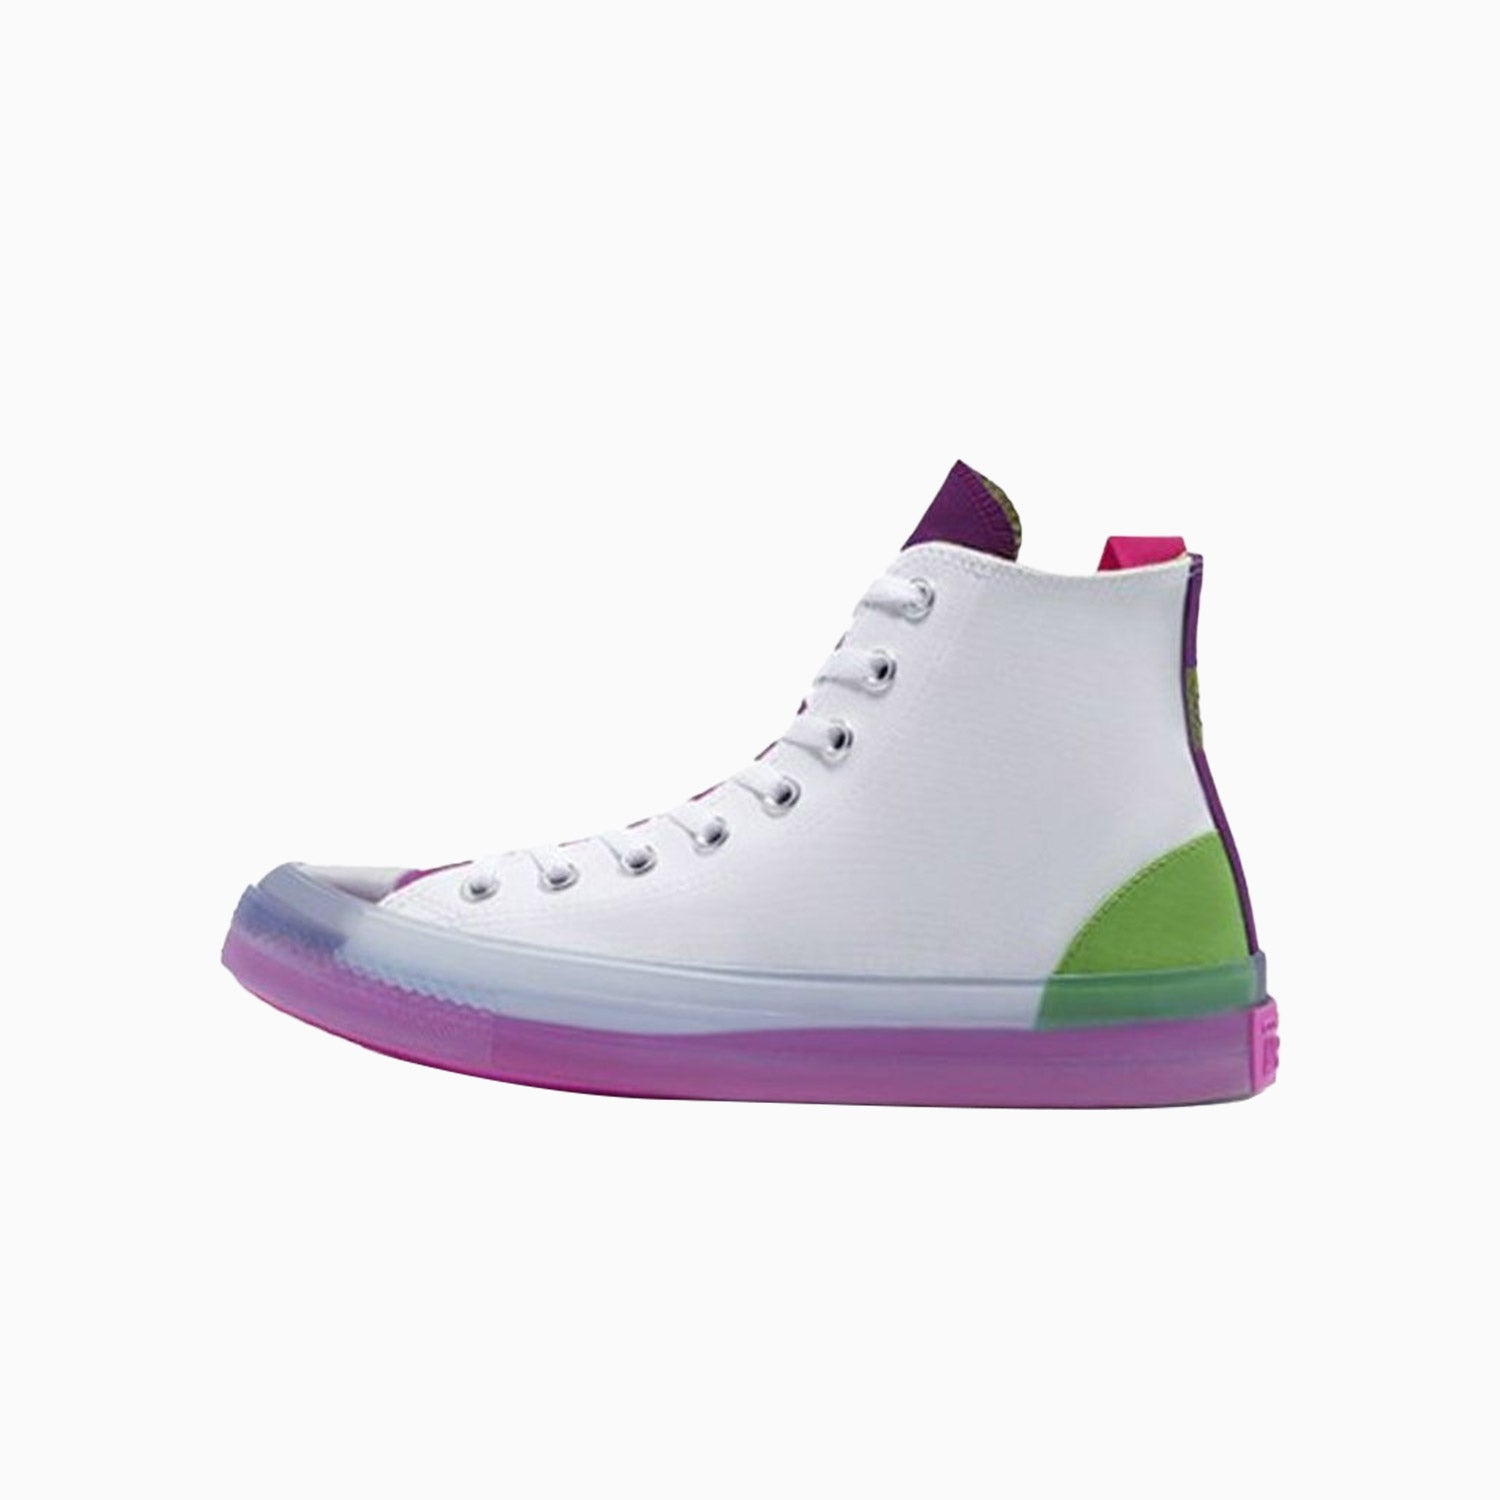 converse-chuck-taylor-all-star-cx-high-dramatic-night-shoes-170833c